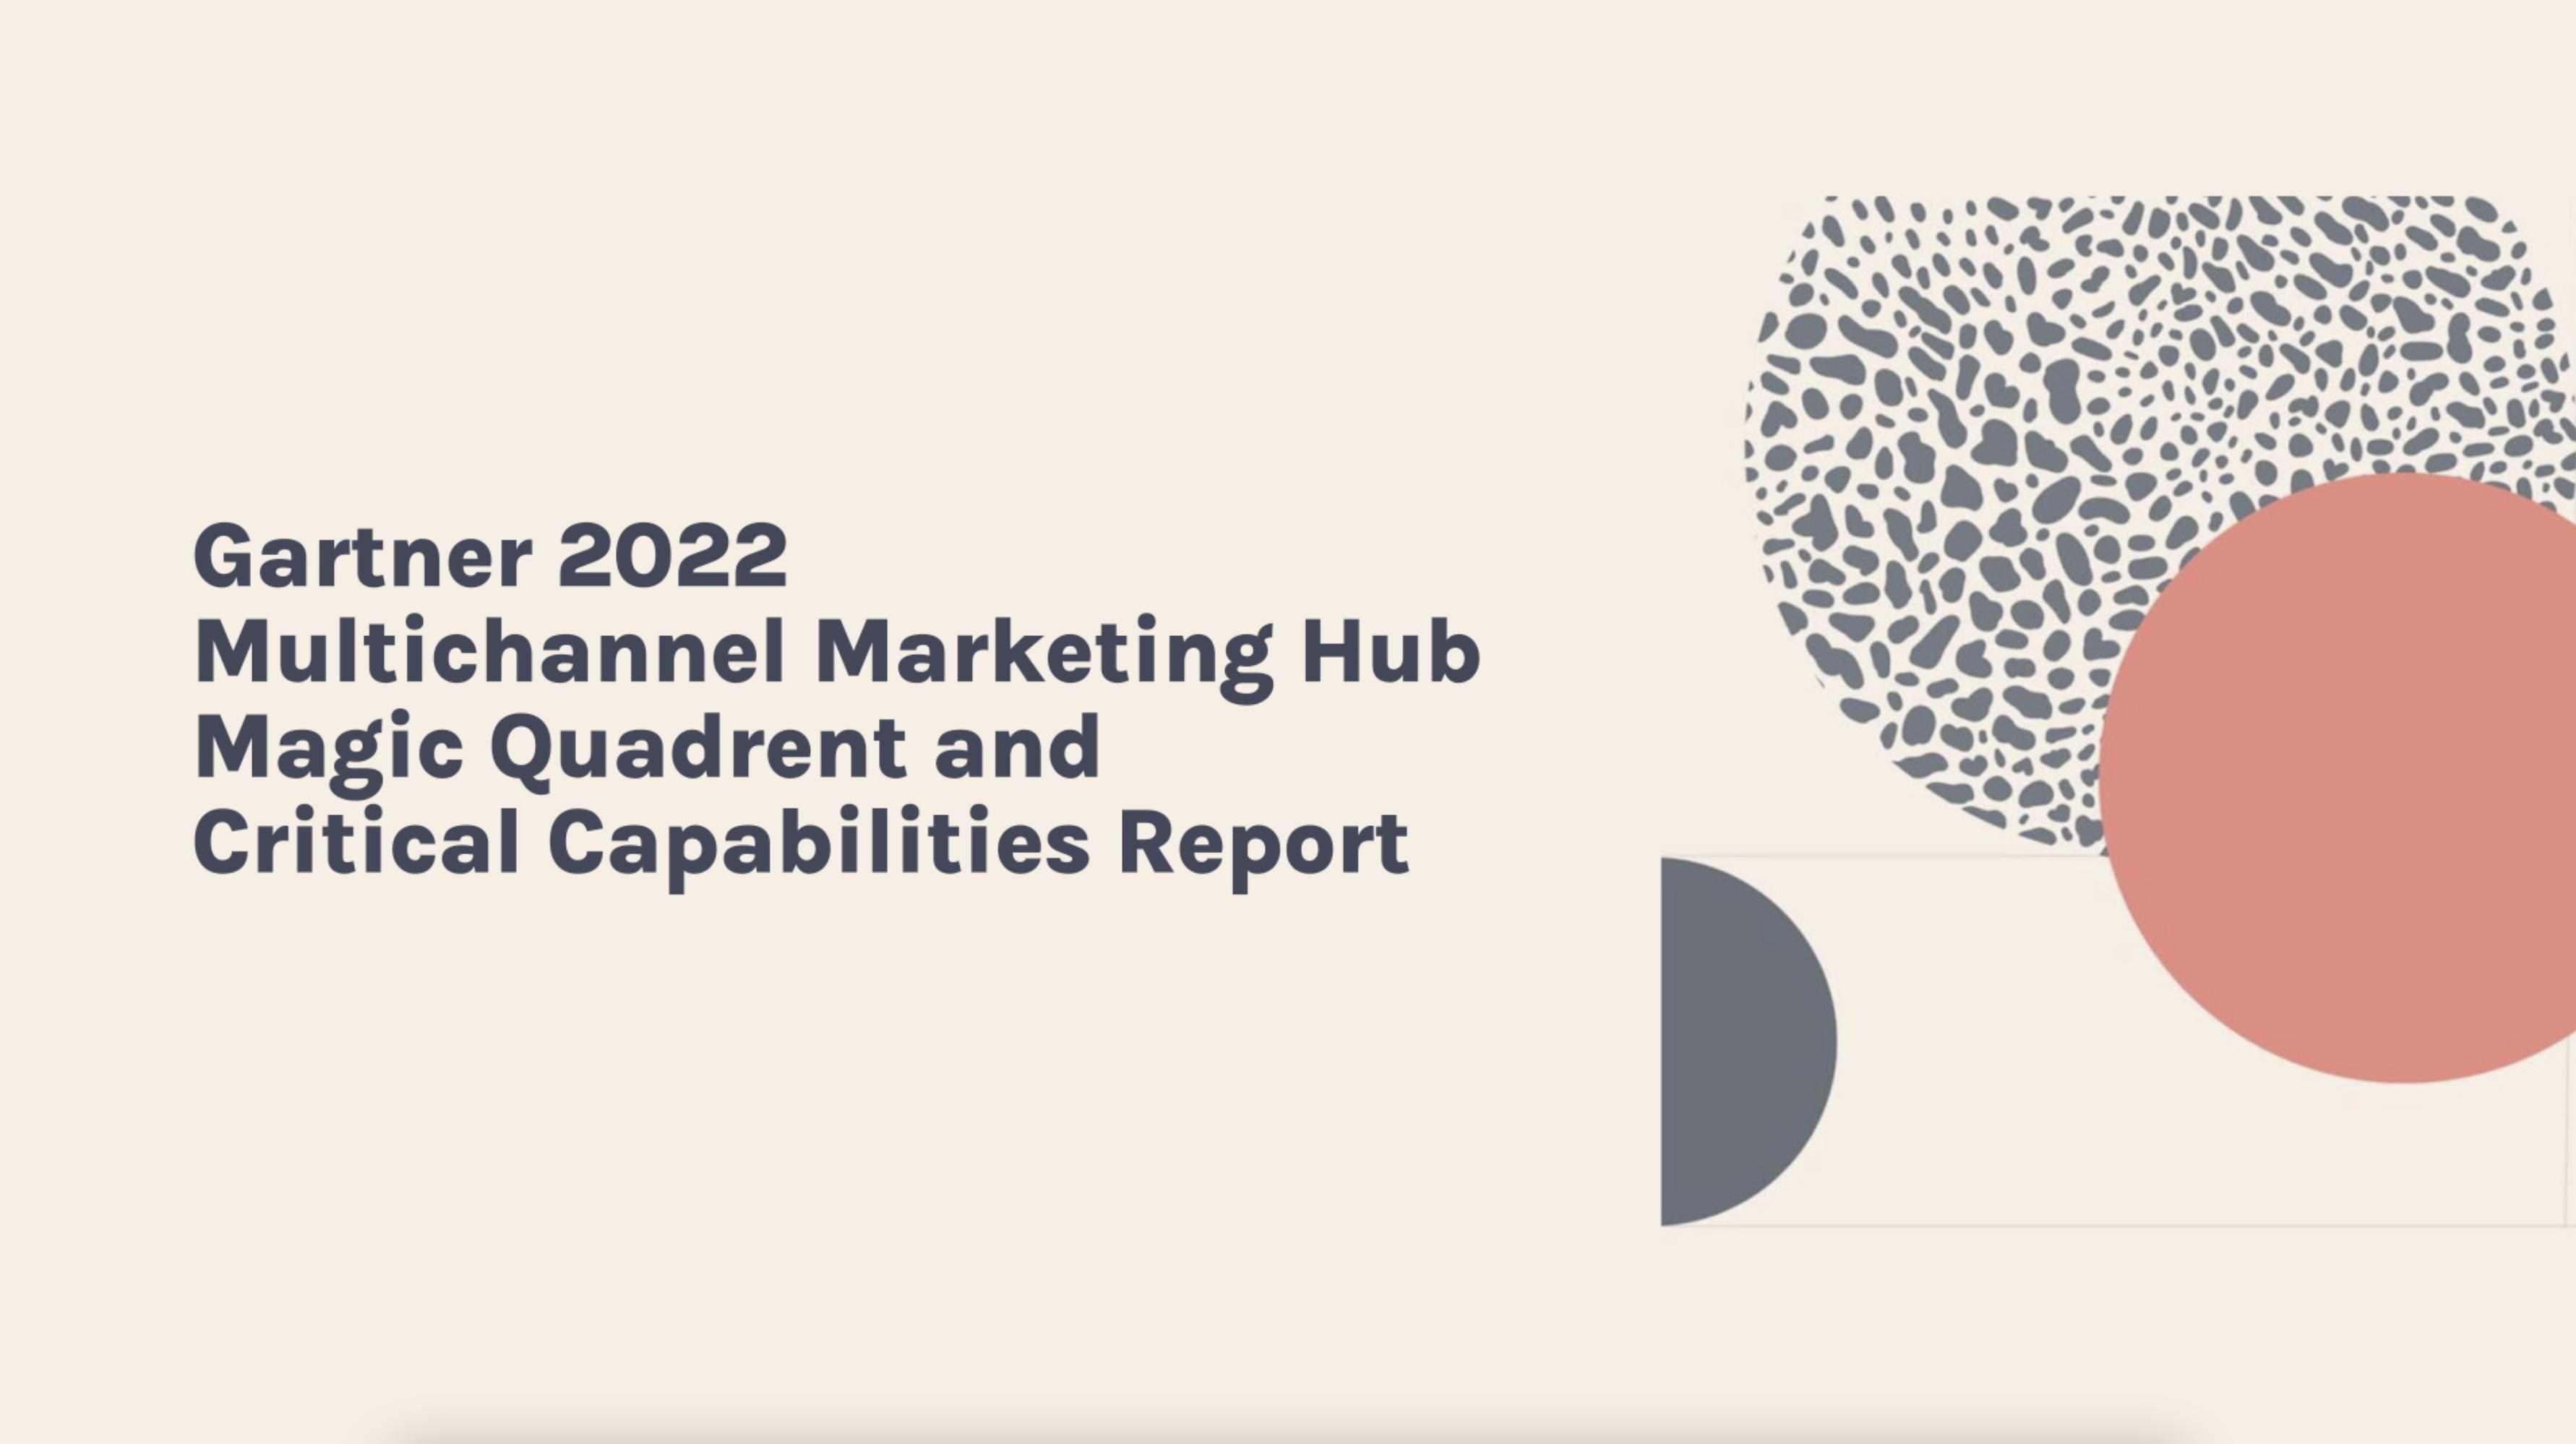 VIDEO: Breakdown of the July 2022 Gartner Multichannel Marketing Hub MQ and Critical Capabilities Report